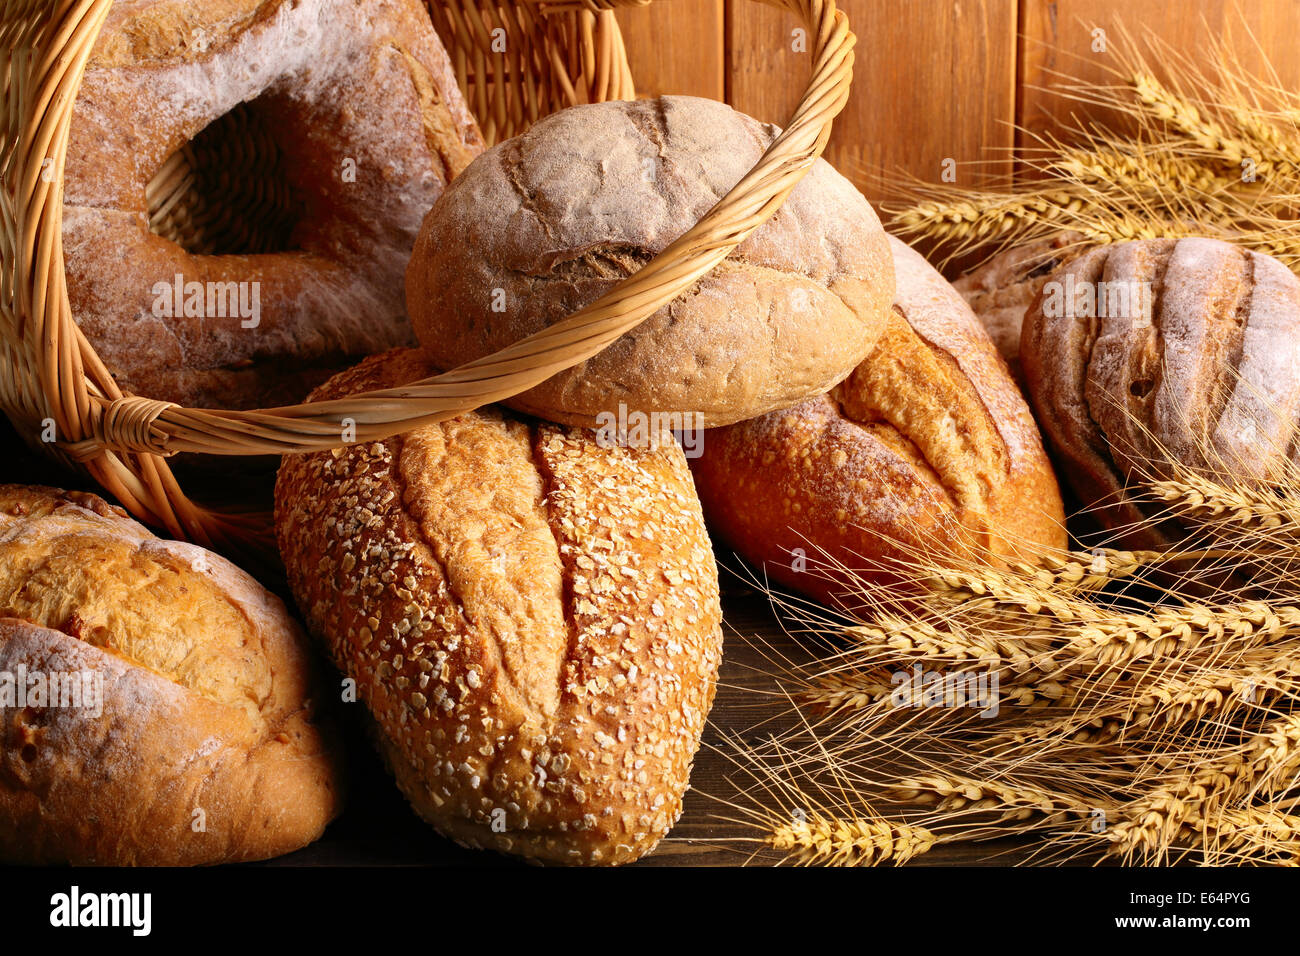 Whole grain wheat bread in basket with wheat ears. Stock Photo